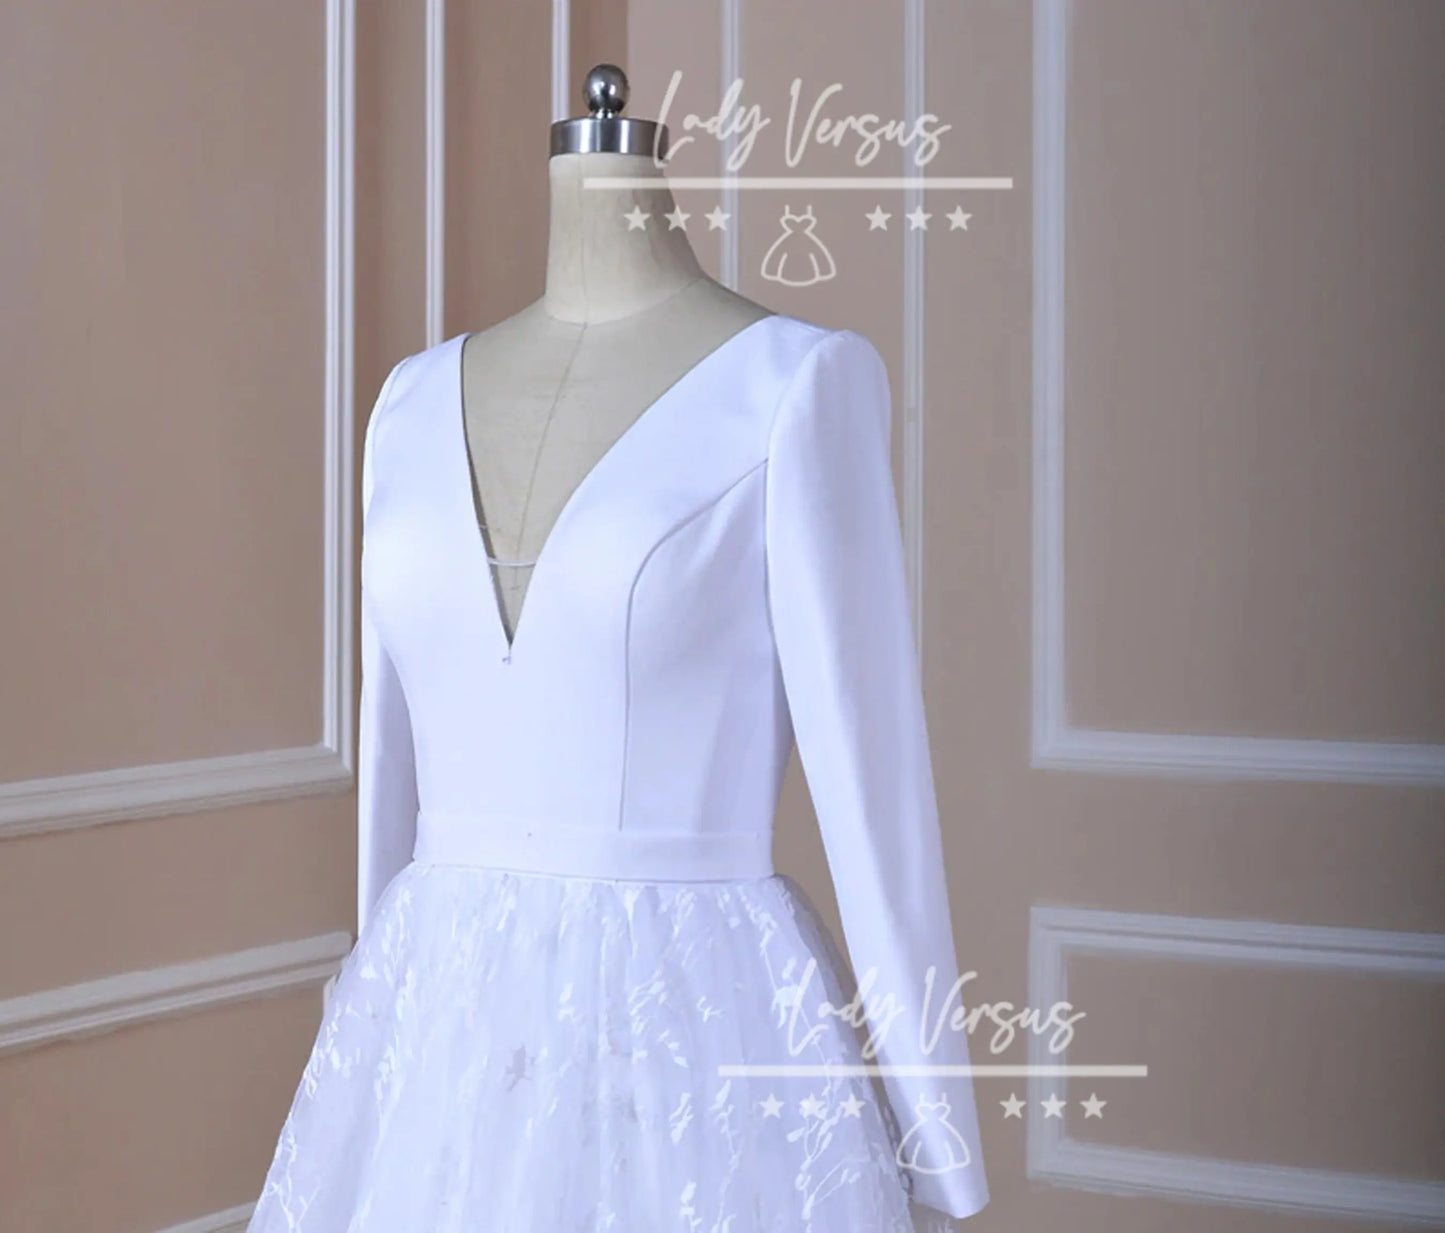 Elegant long sleeve bridal dress/ Classy Wedding  Dress /Beach wedding dress /bridal gown/ bohemian lace dress/  lace dress Lady Versus